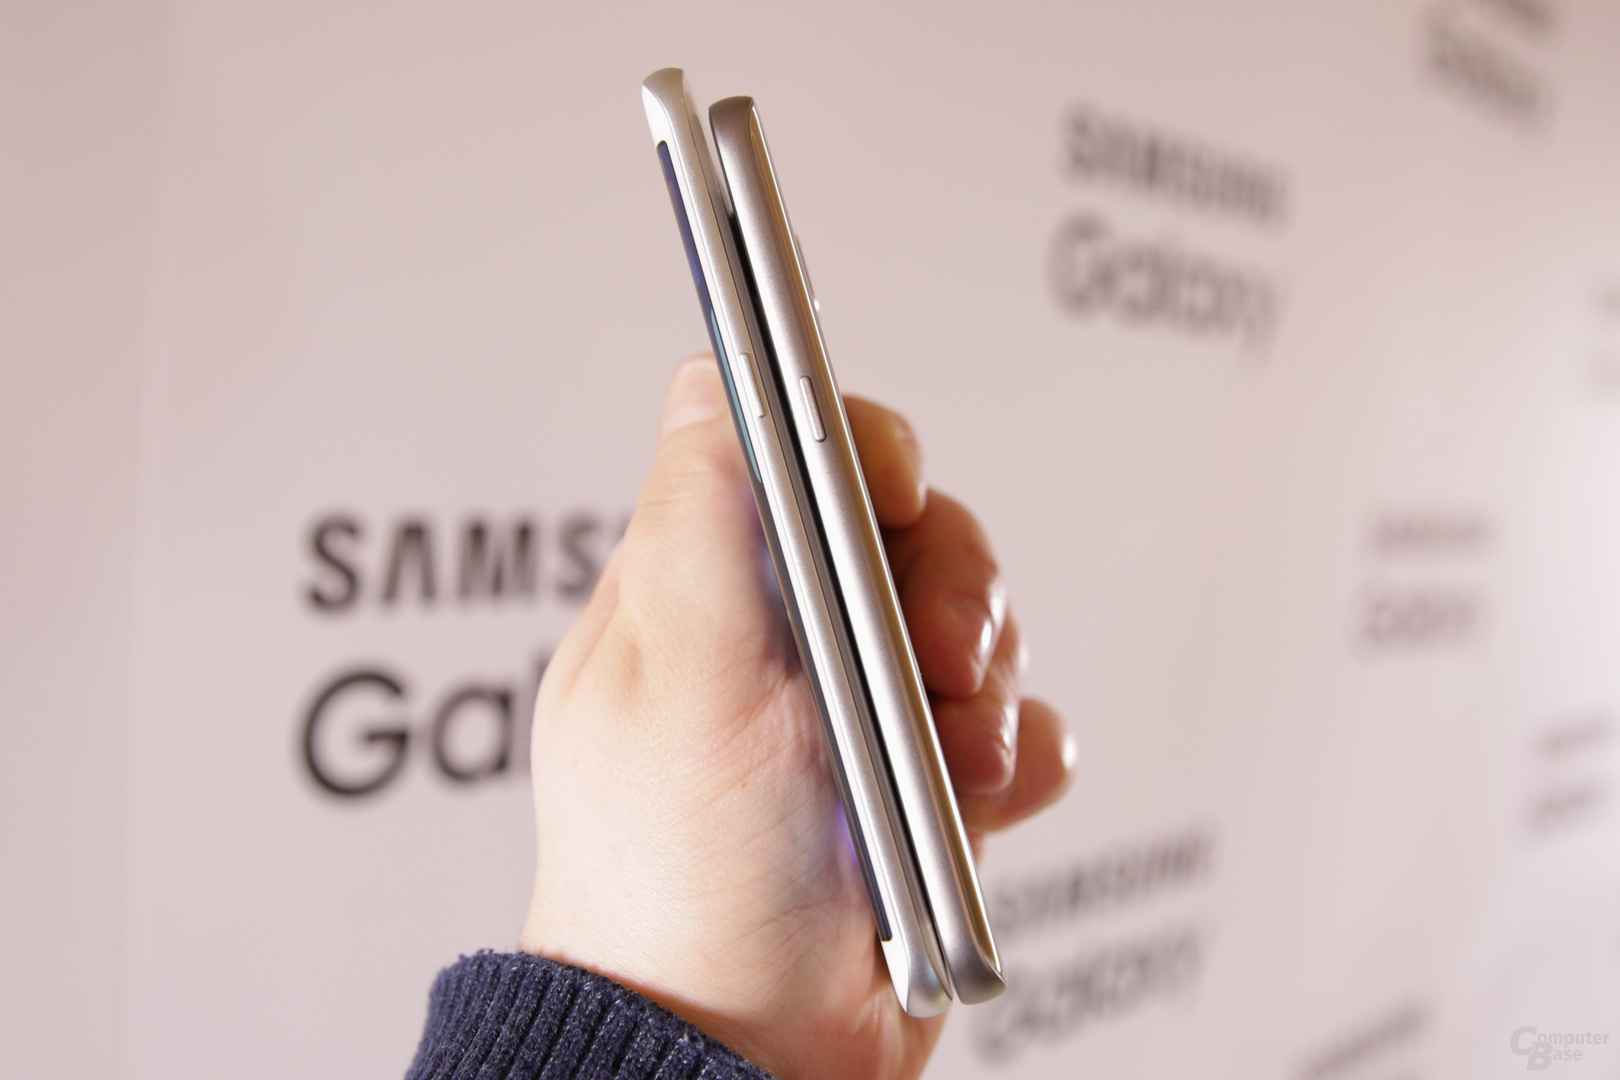 Galaxy S7 edge in Weiß, Galaxy S7 in Gold